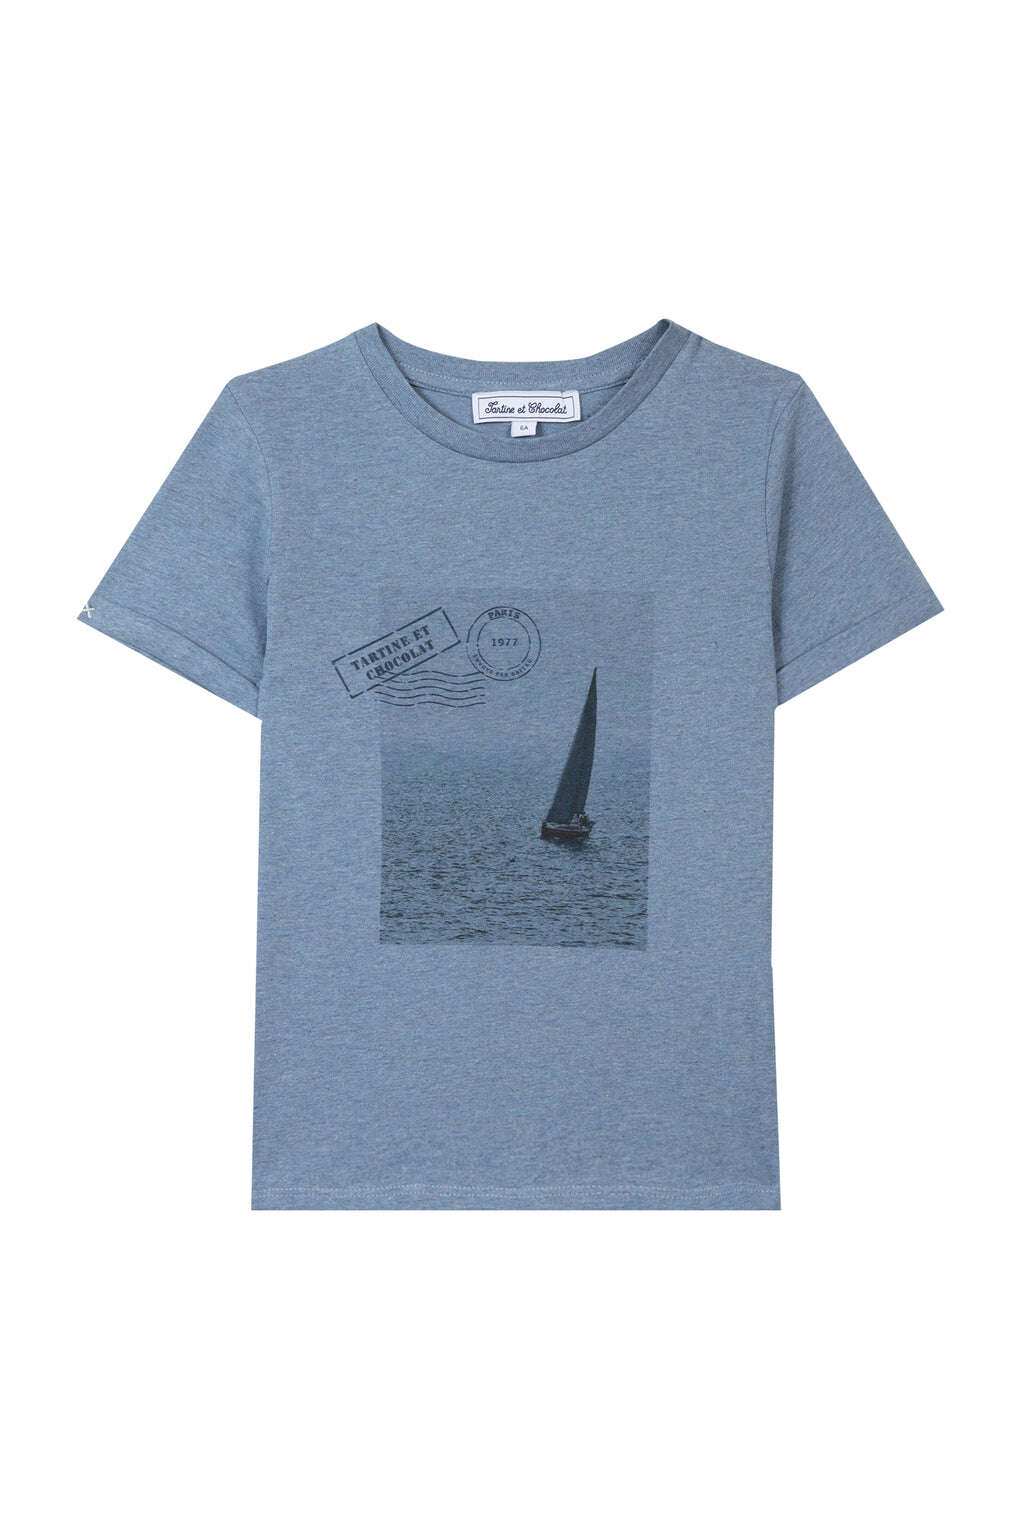 Tee-shirt - Jersey Bleu marin  illustration